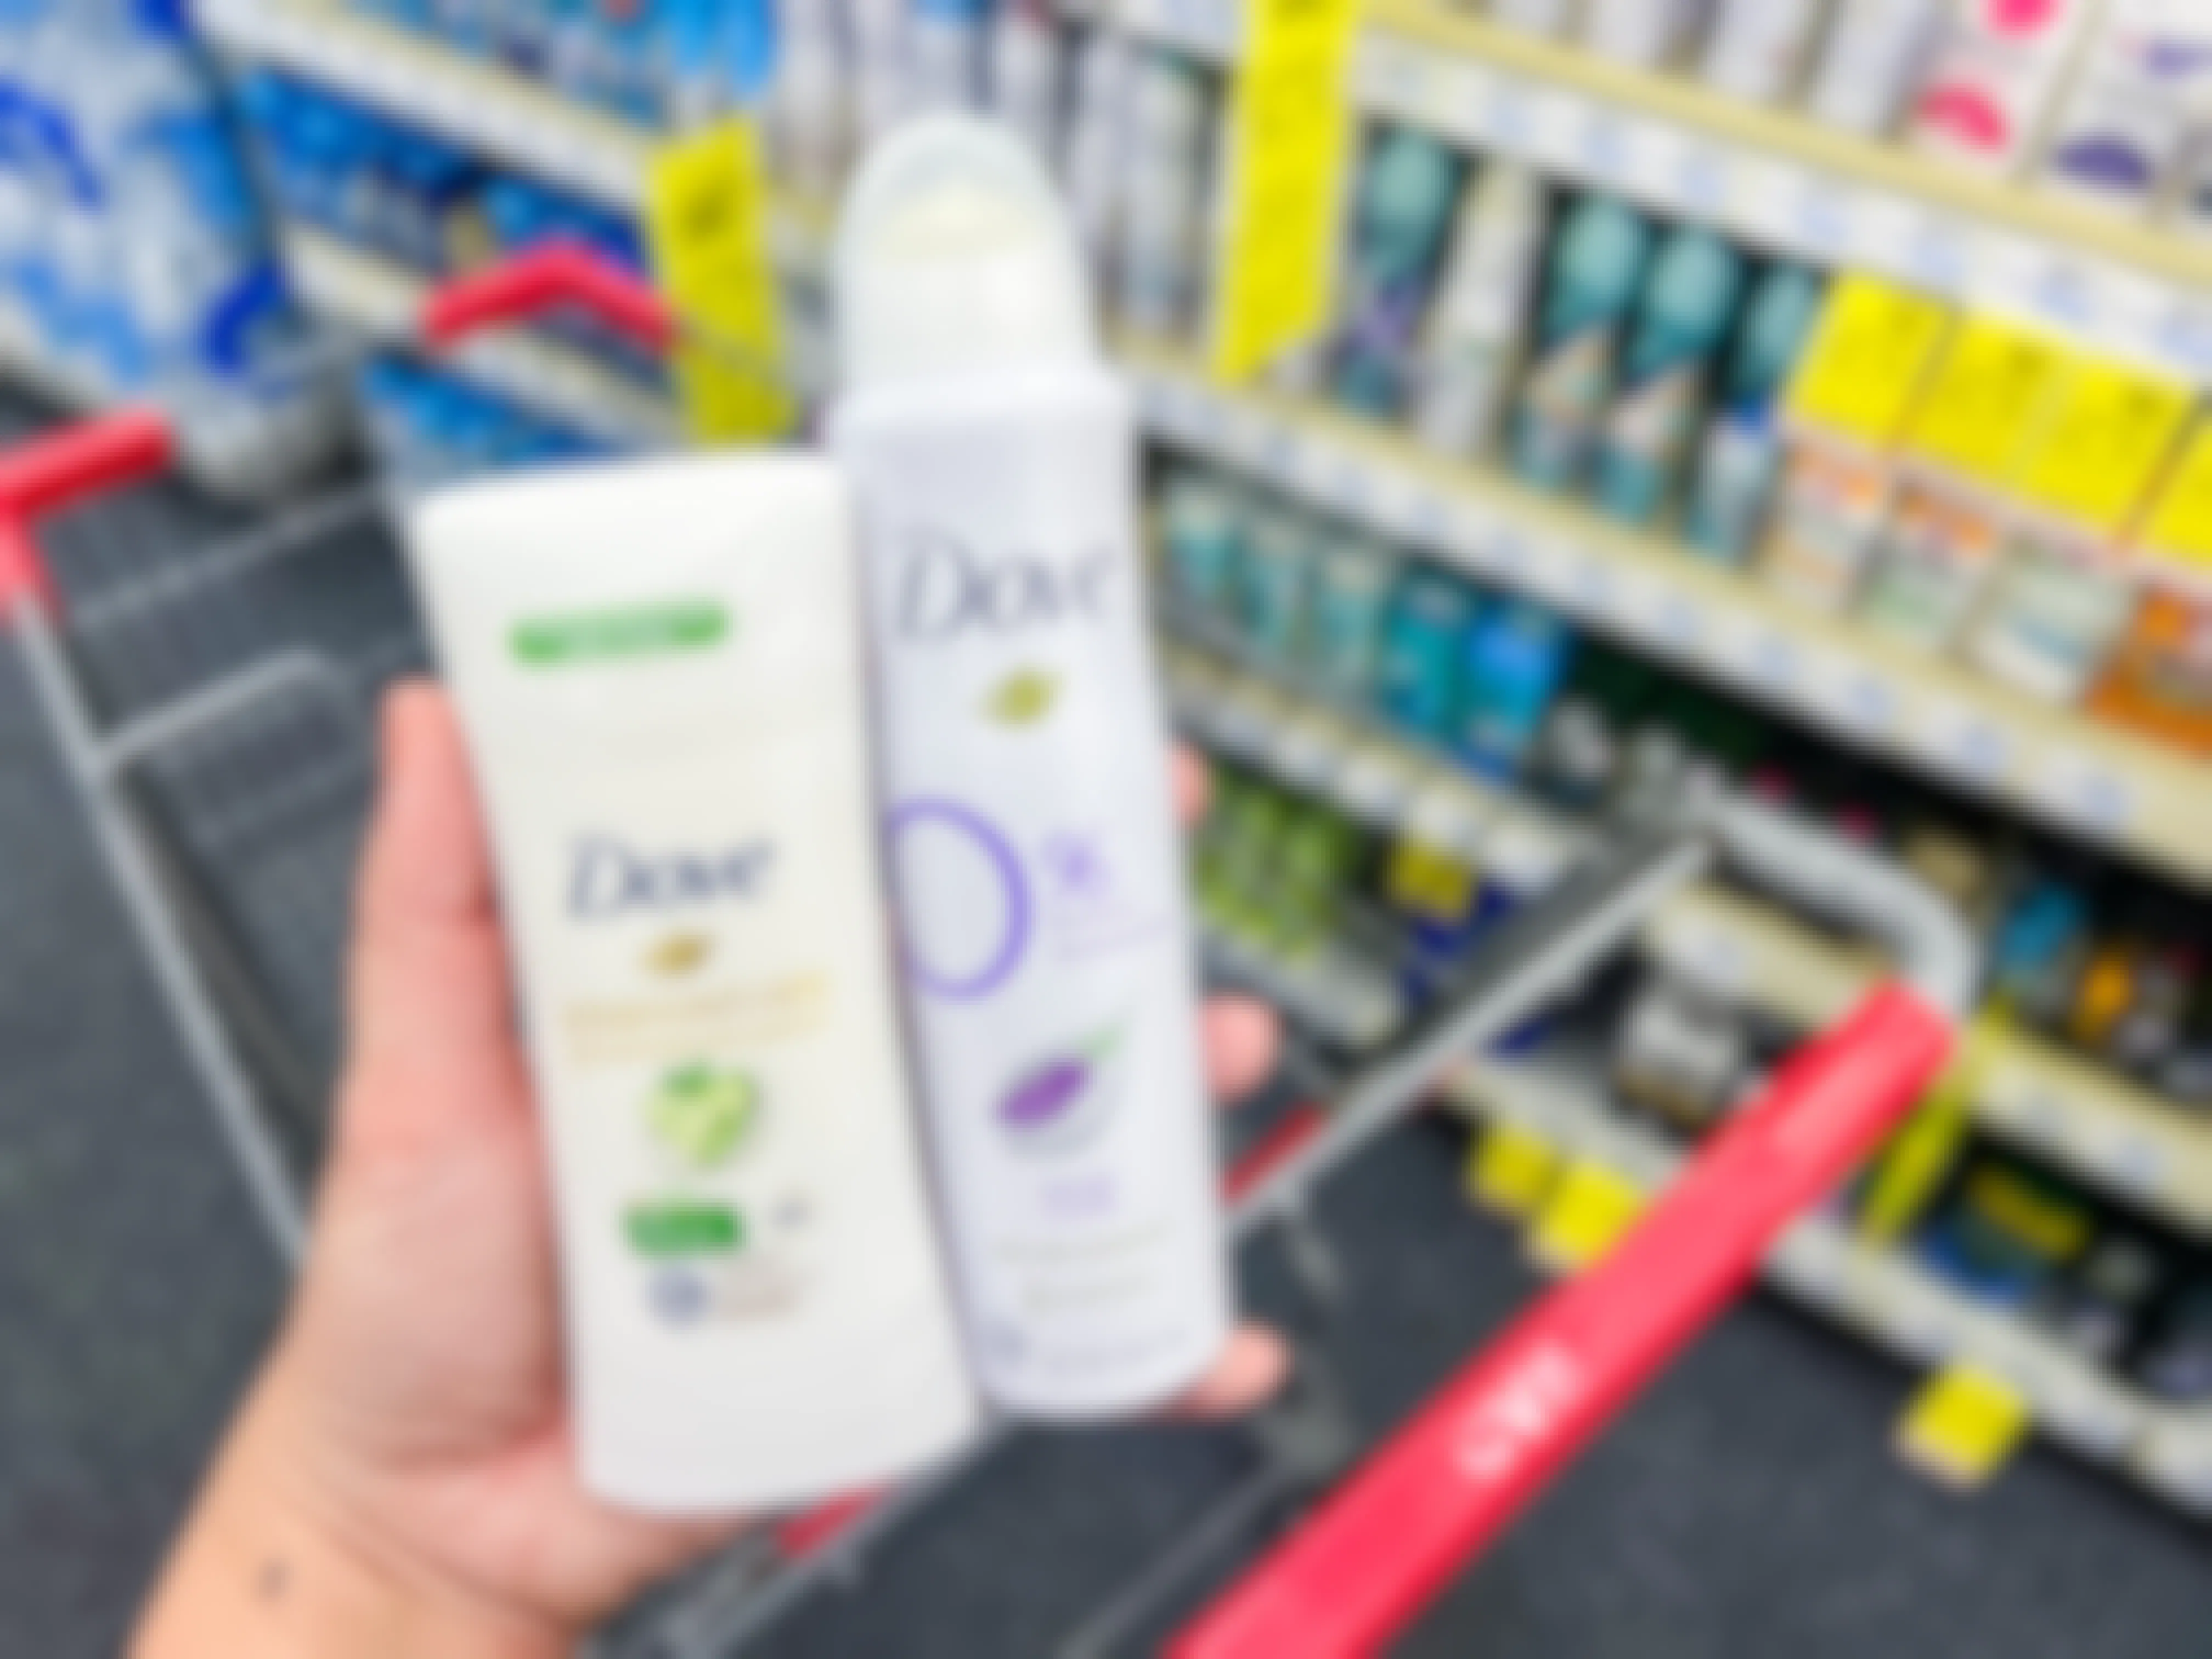 person holding dove stick and spray deodorant near cvs shopping cart